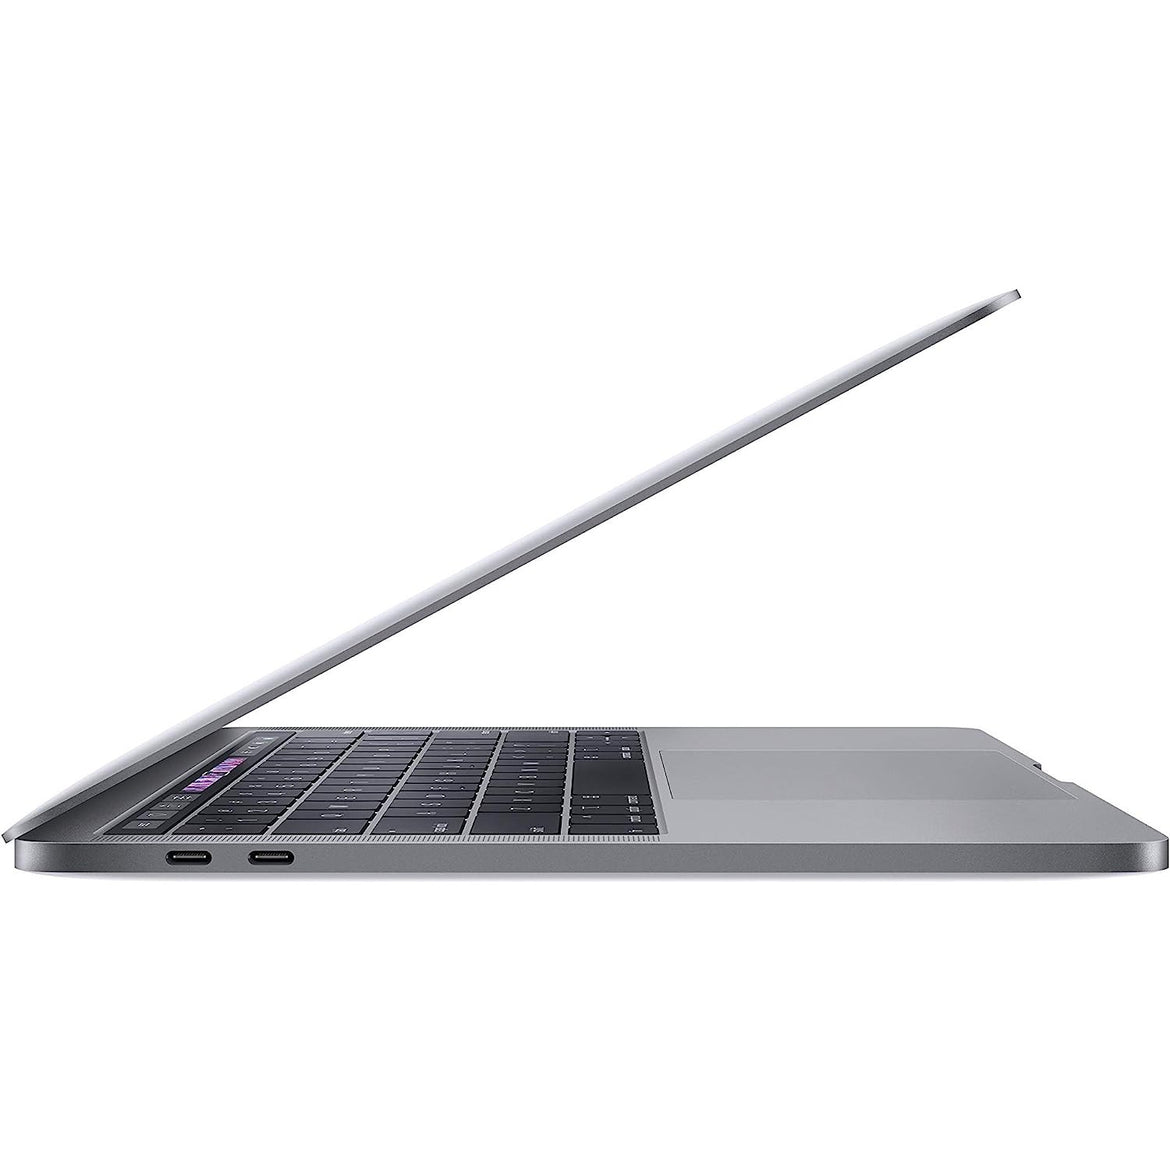 MacBook Pro 13.3-inch Laptop - 1.4GHz i5 - 8GB RAM - 512GB SSD - Space Gray (2020)